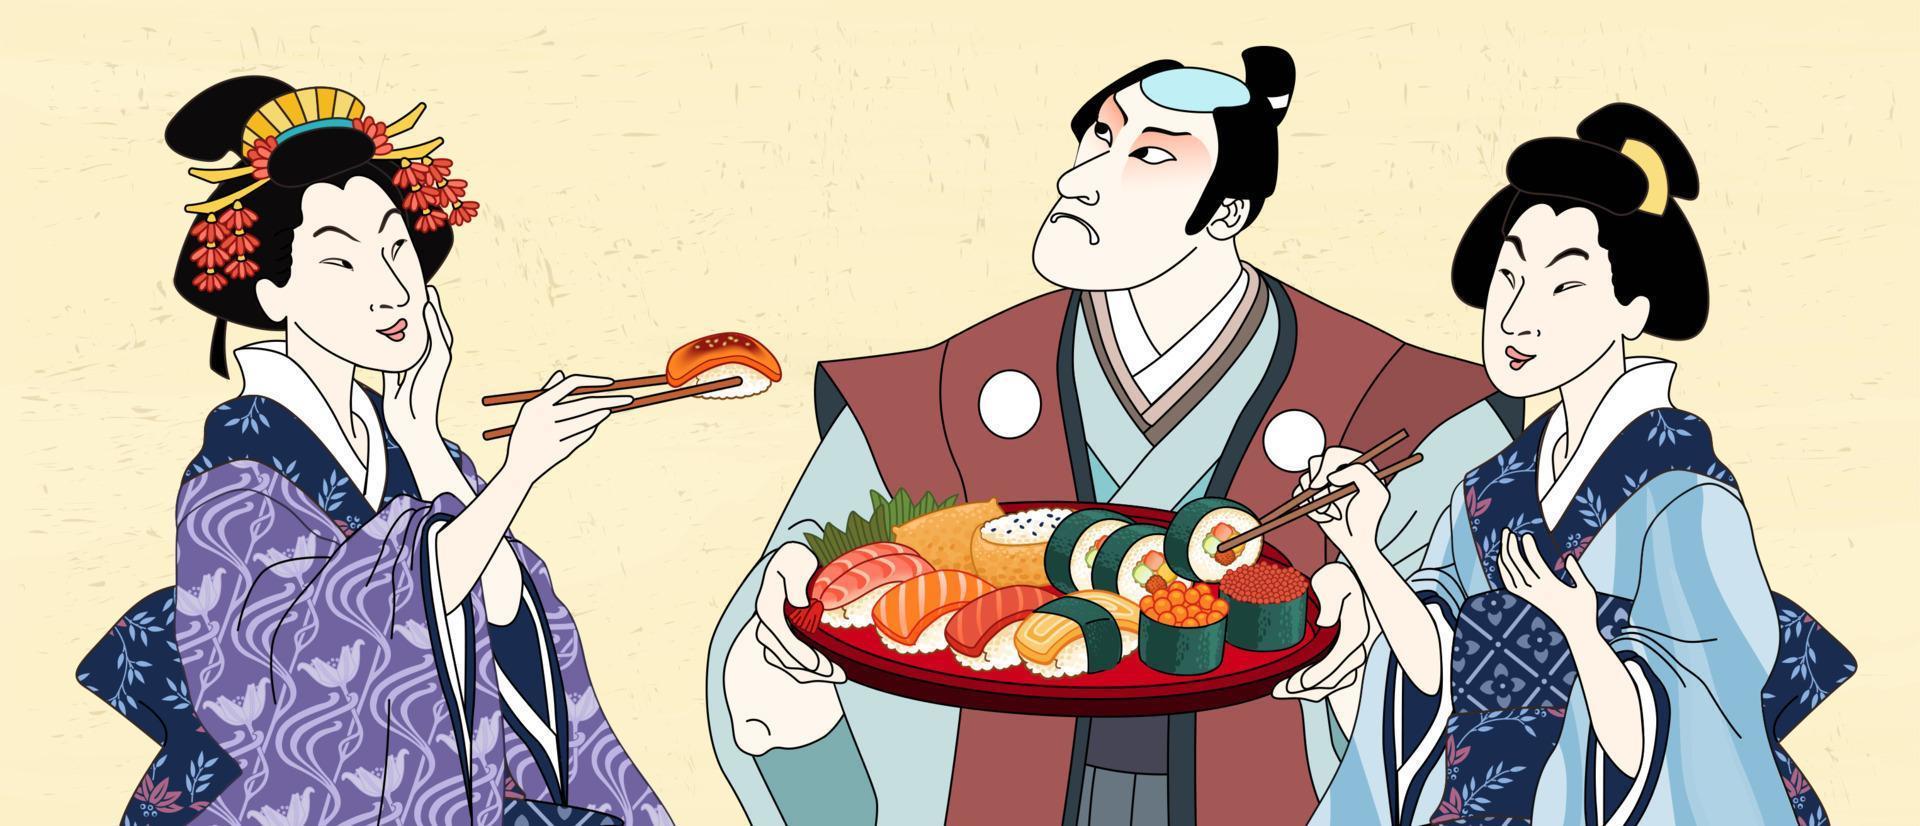 retro Japans mensen aan het eten sashimi samen in ukiyo-e stijl vector